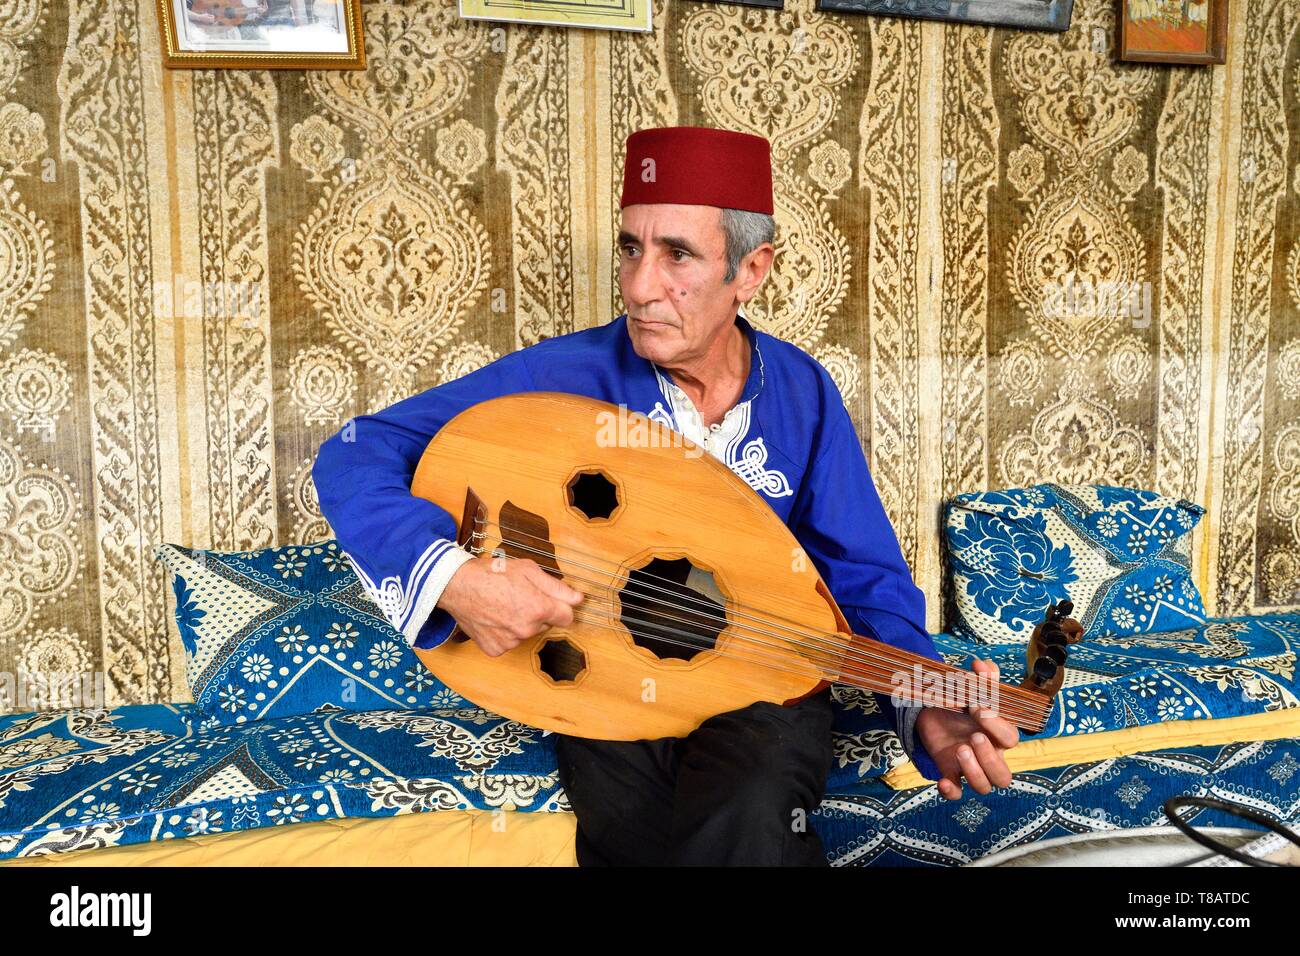 Morocco, Tangier Tetouan region, Tangier, the old city (medina), Kasbah, oud player, Les Fils du Détroit tea house Stock Photo